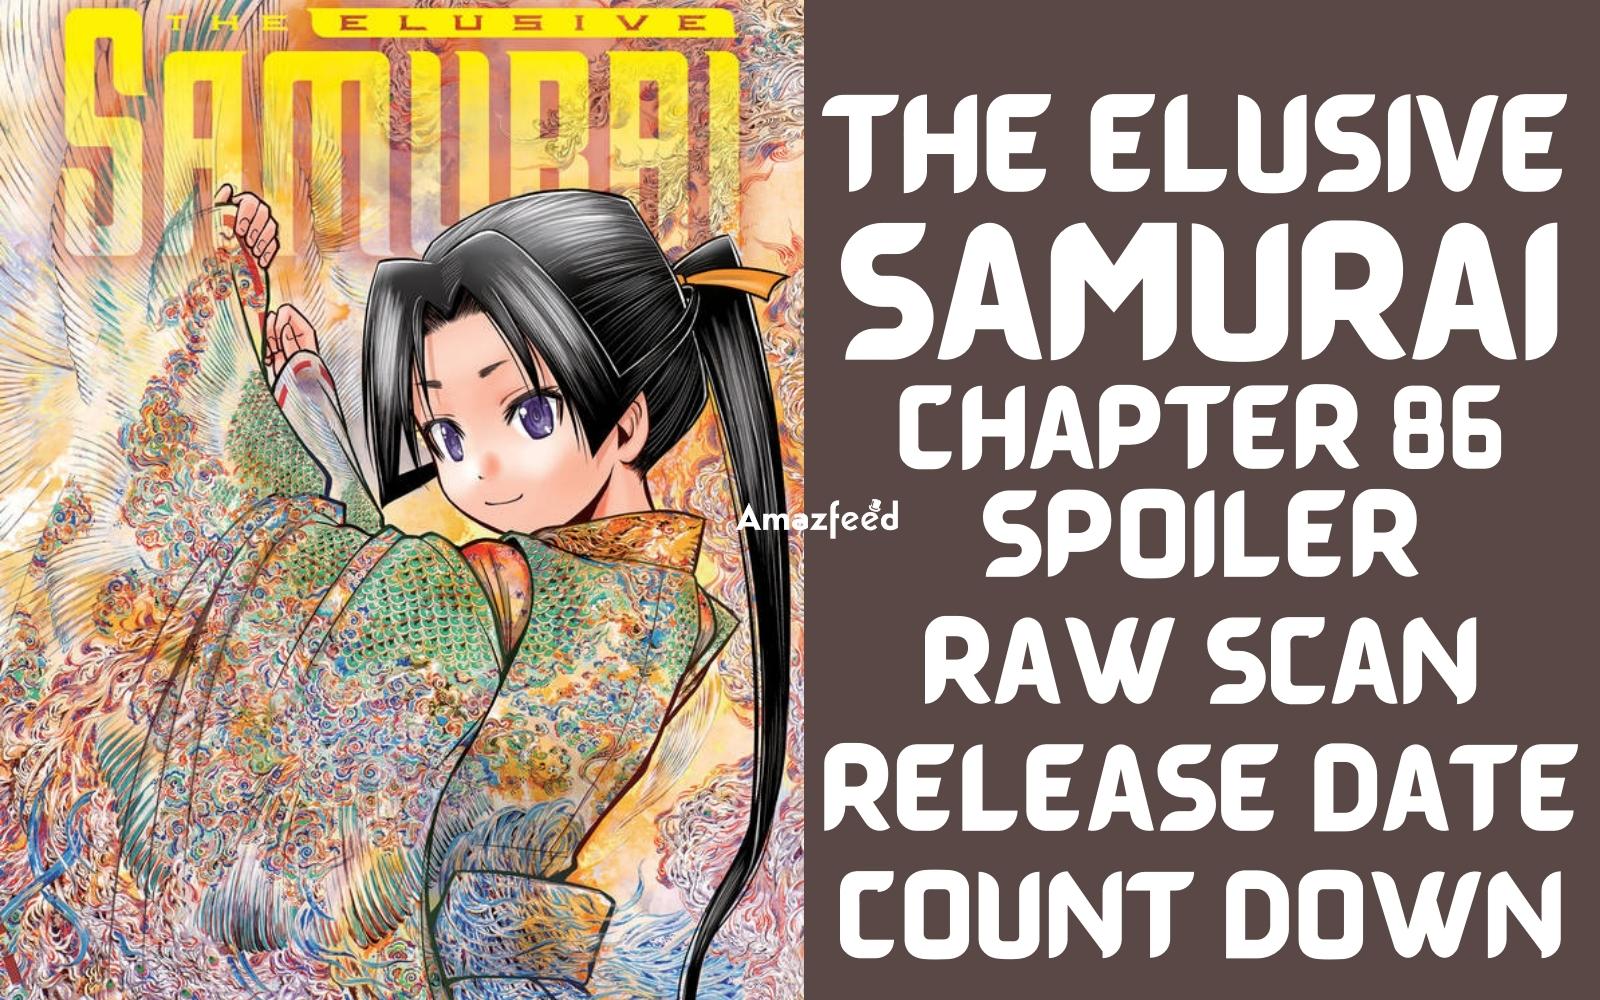 The Elusive Samurai Chapter 86 Spoiler, Release Date, Raw Scan, CountDown